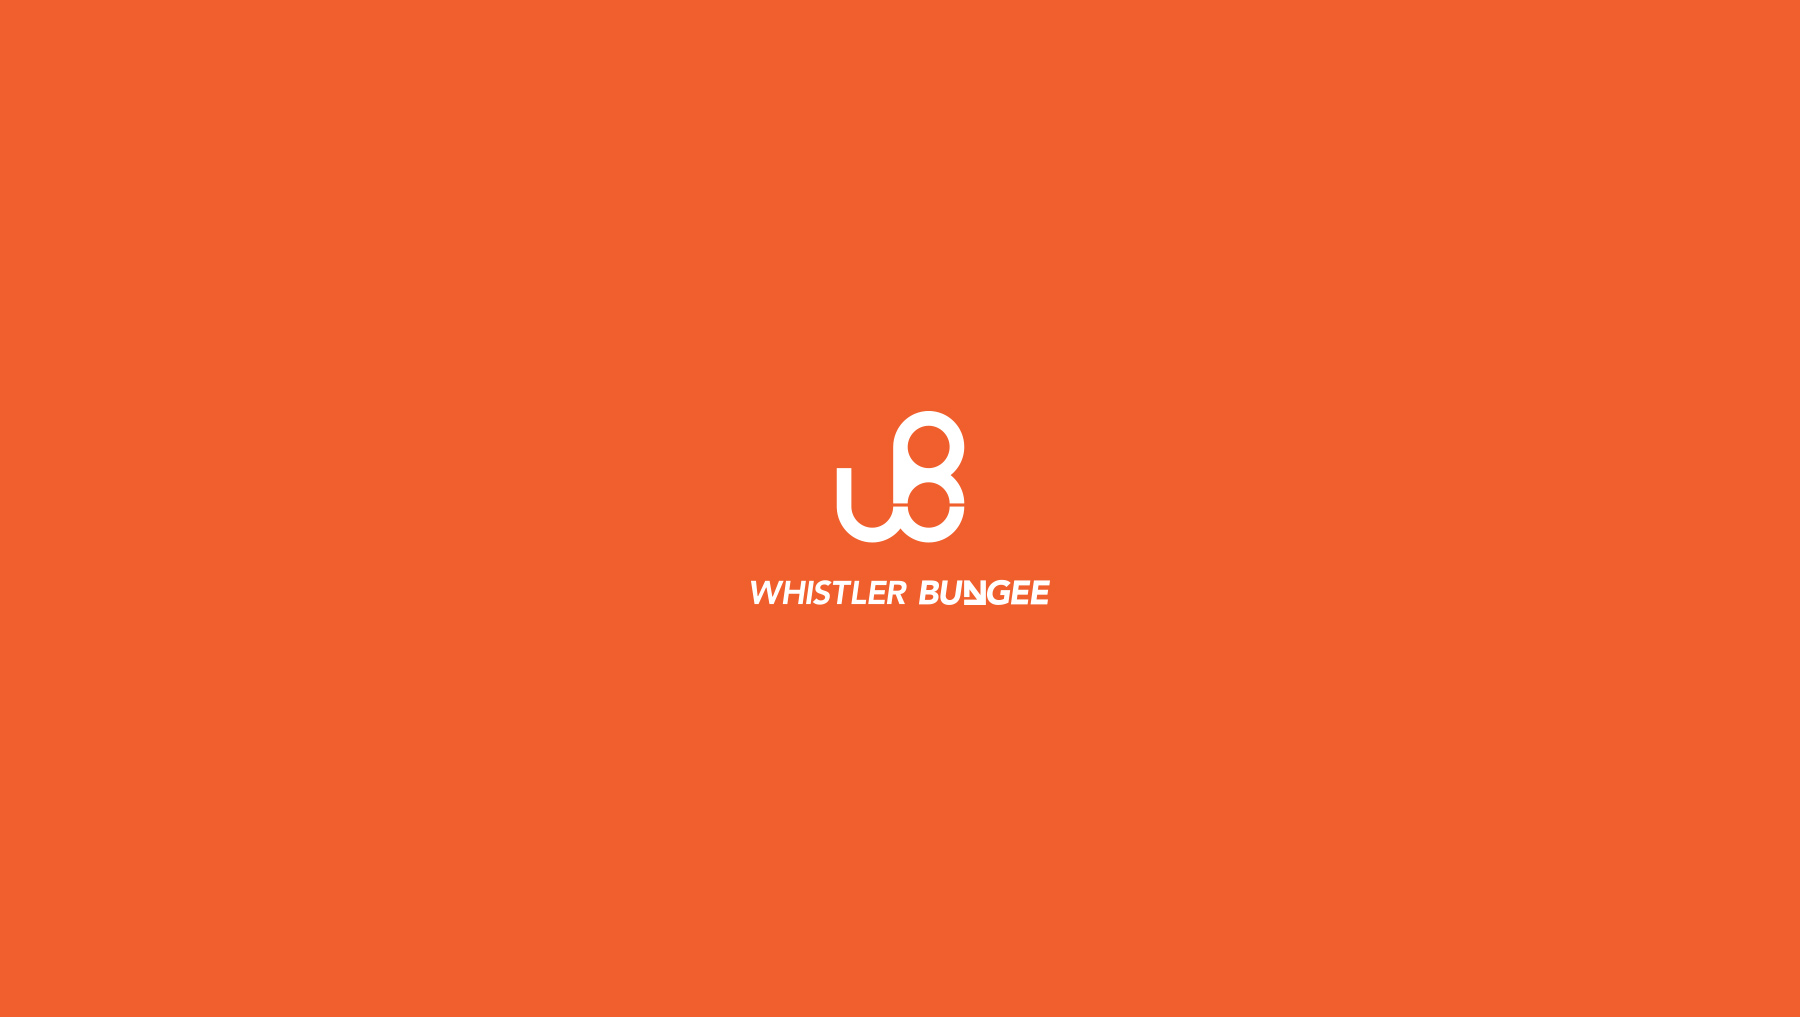 Whistler Bungee rebrand Orange Background